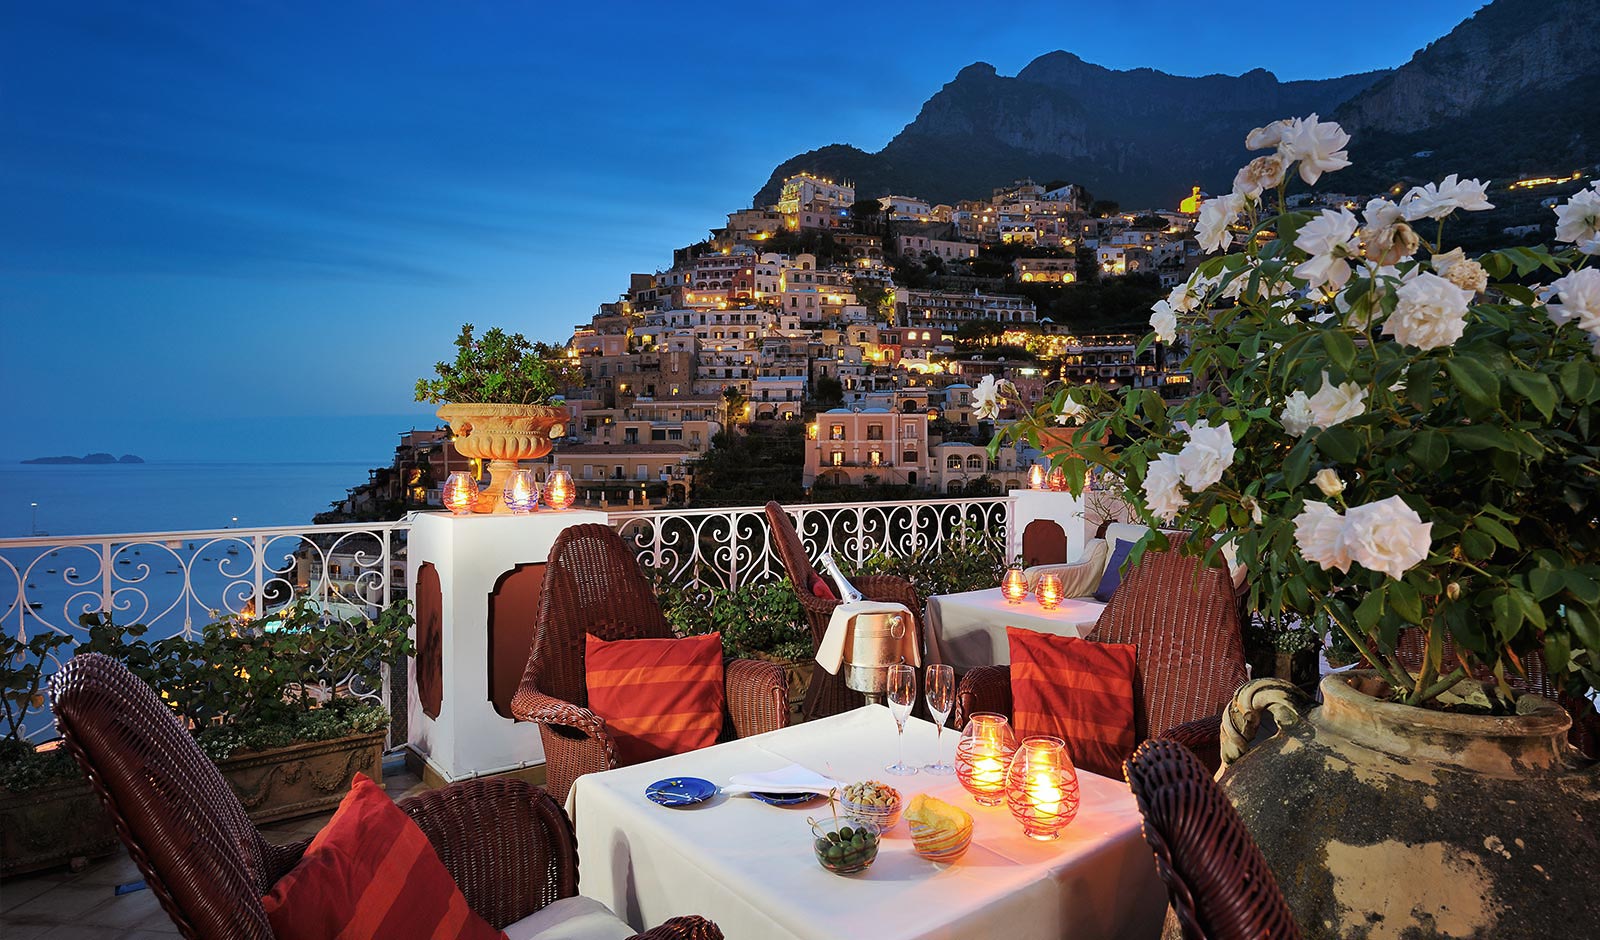 Le Sirenuse's Champagne Bar is a great Amalfi Coast restaurant